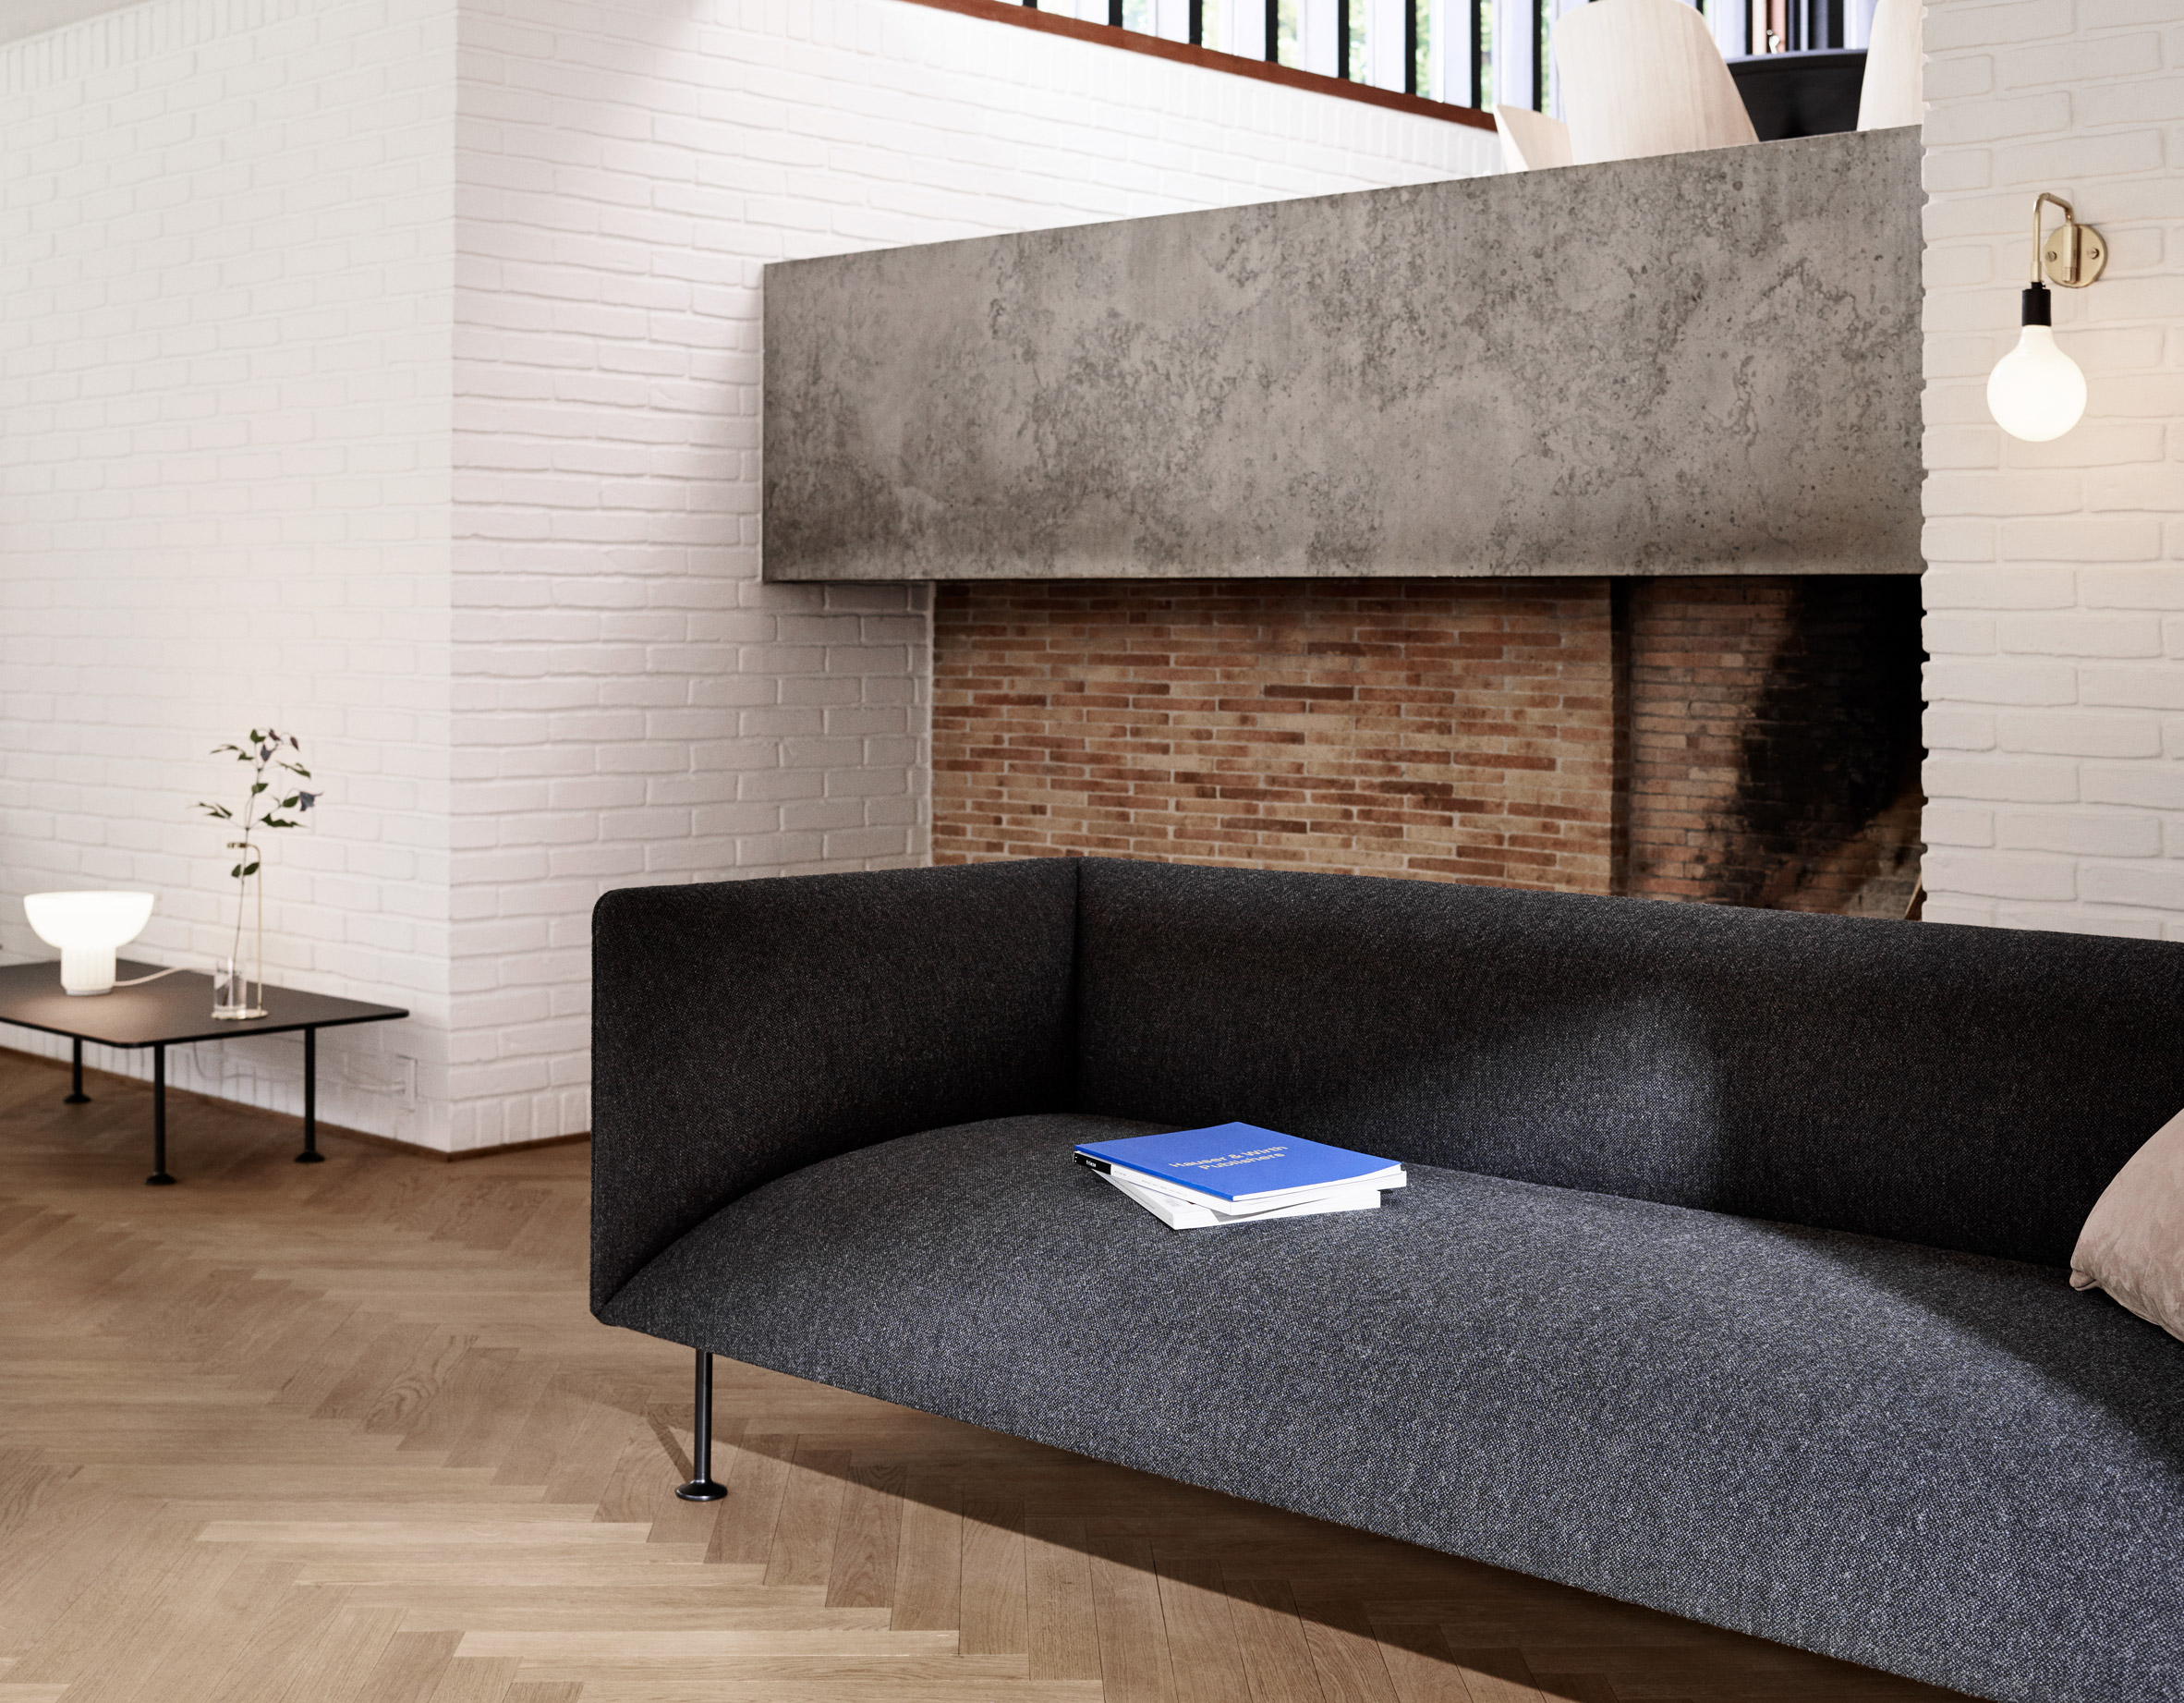 maison-objet-menu-design-furniture-lighting-tables_dezeen_2364_col_3